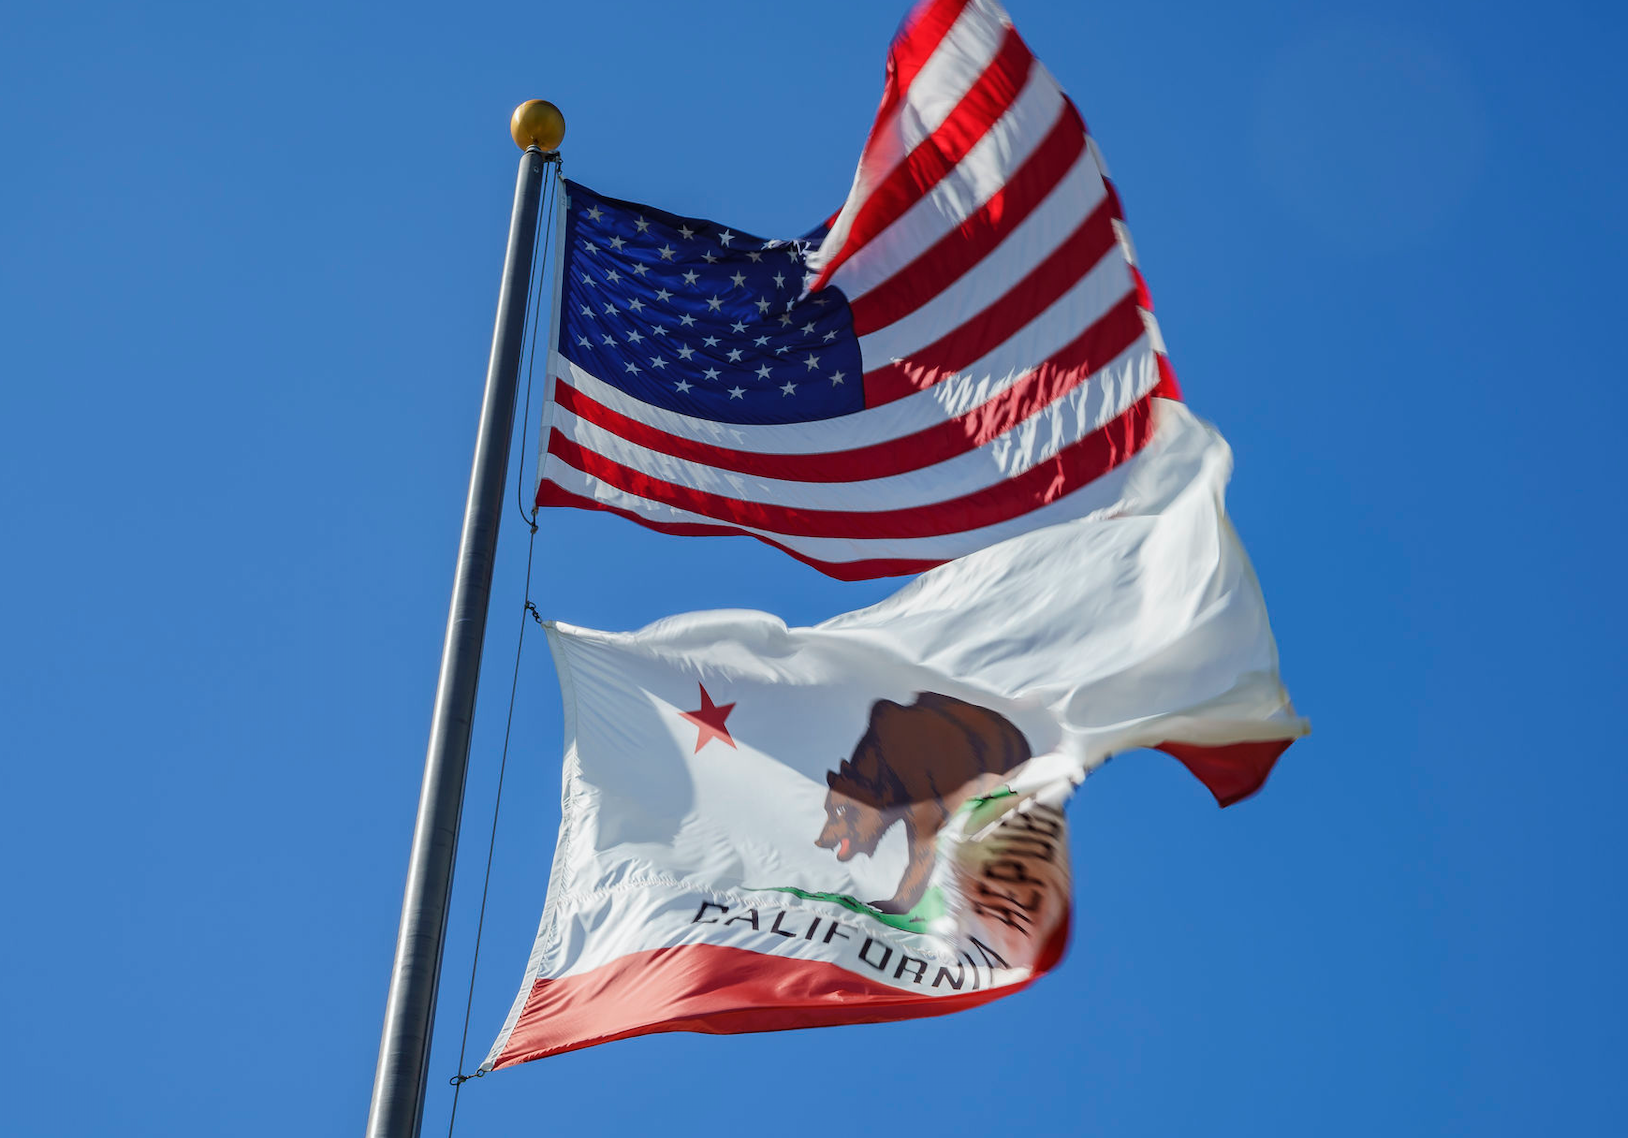 US and California flags on flag pole